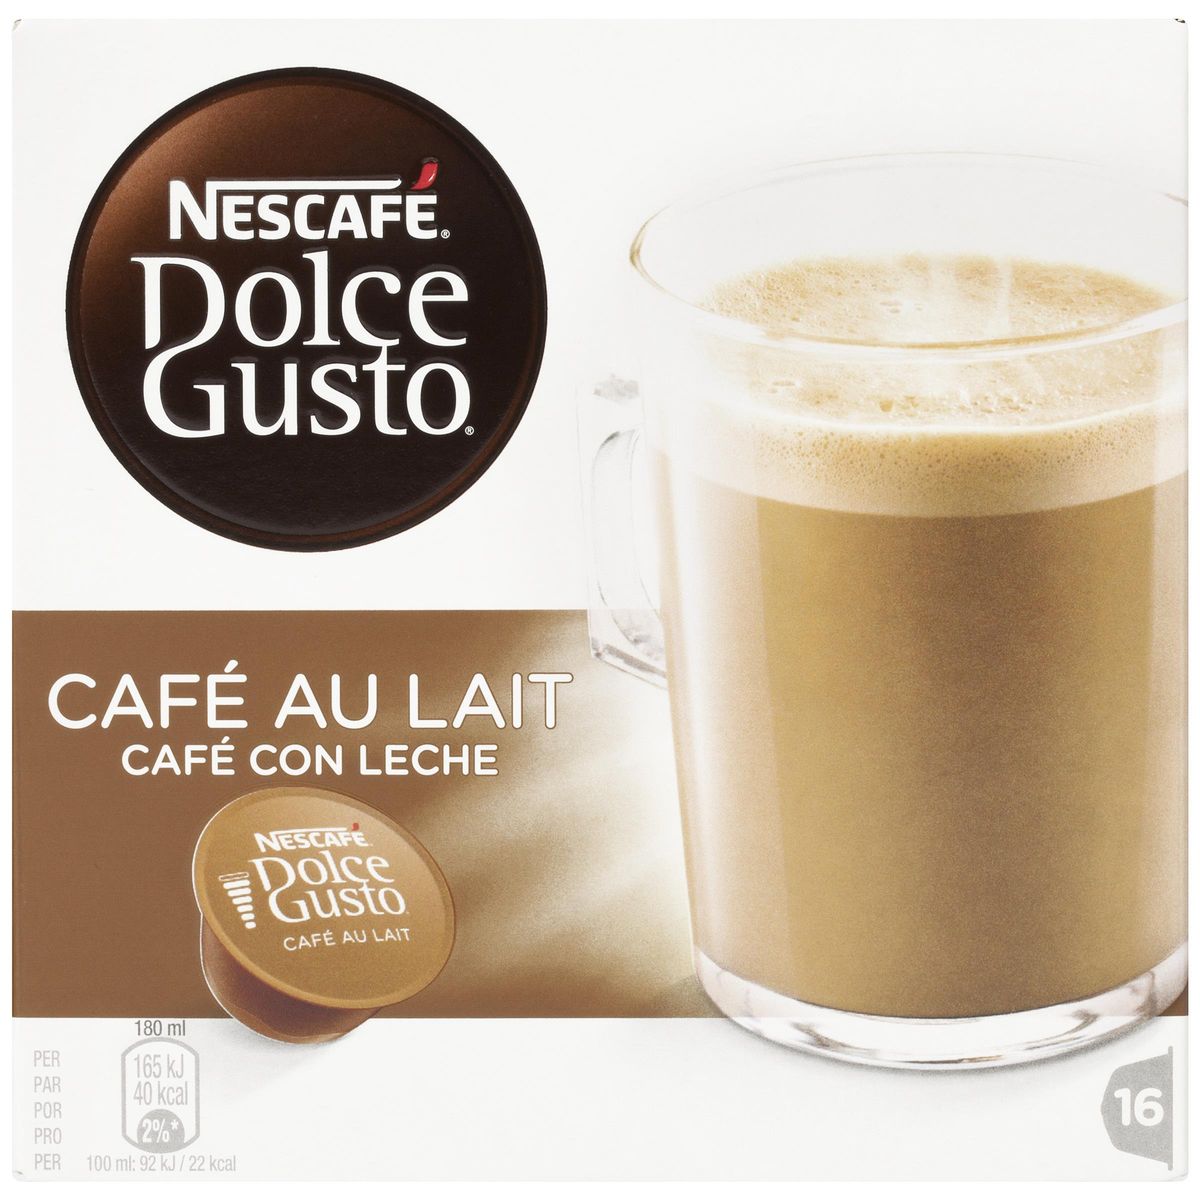 NESCAFE DOLCE GUSTO CAFE CON LECHE 16X10GR - Pepe la Sal compra online